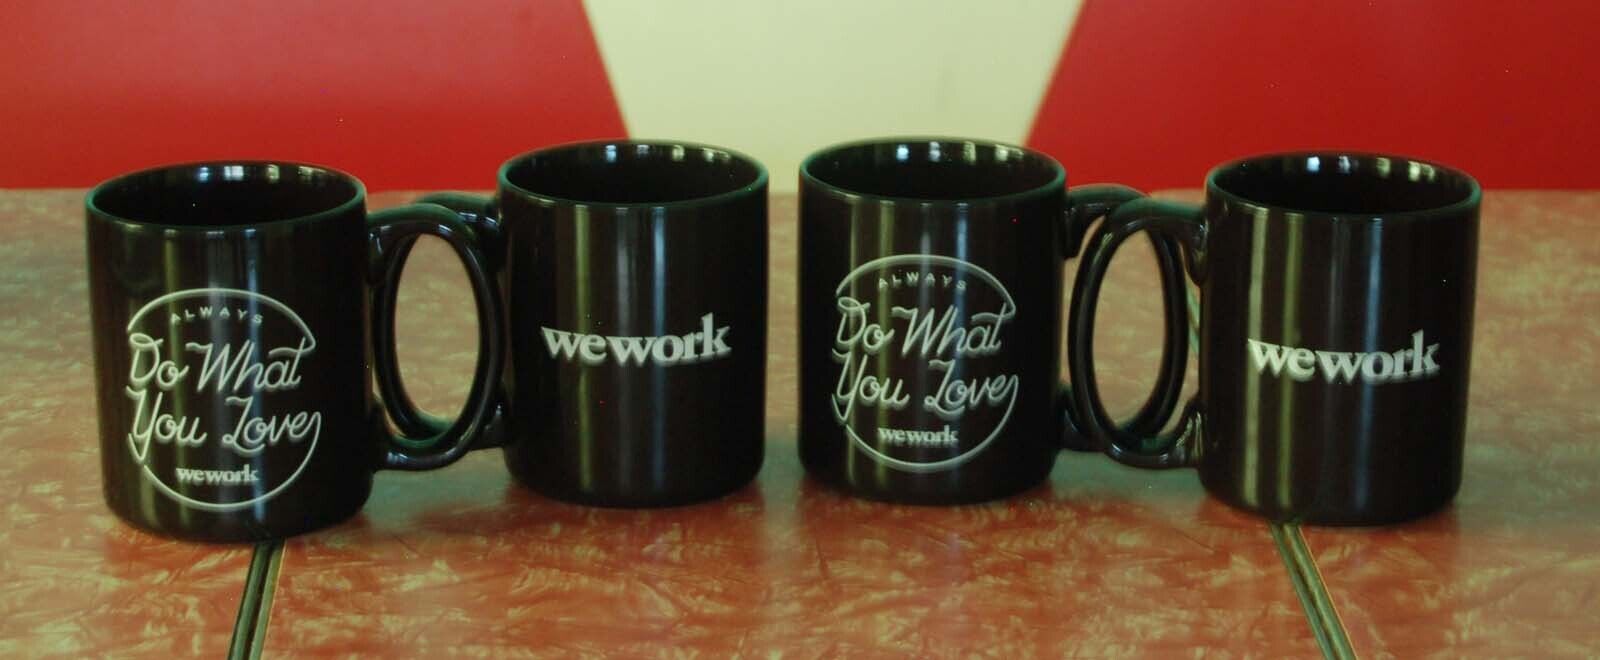 WeWork “Always Do What You Love” Black Coffee Mug 12 oz. Brand New 4 Quantity